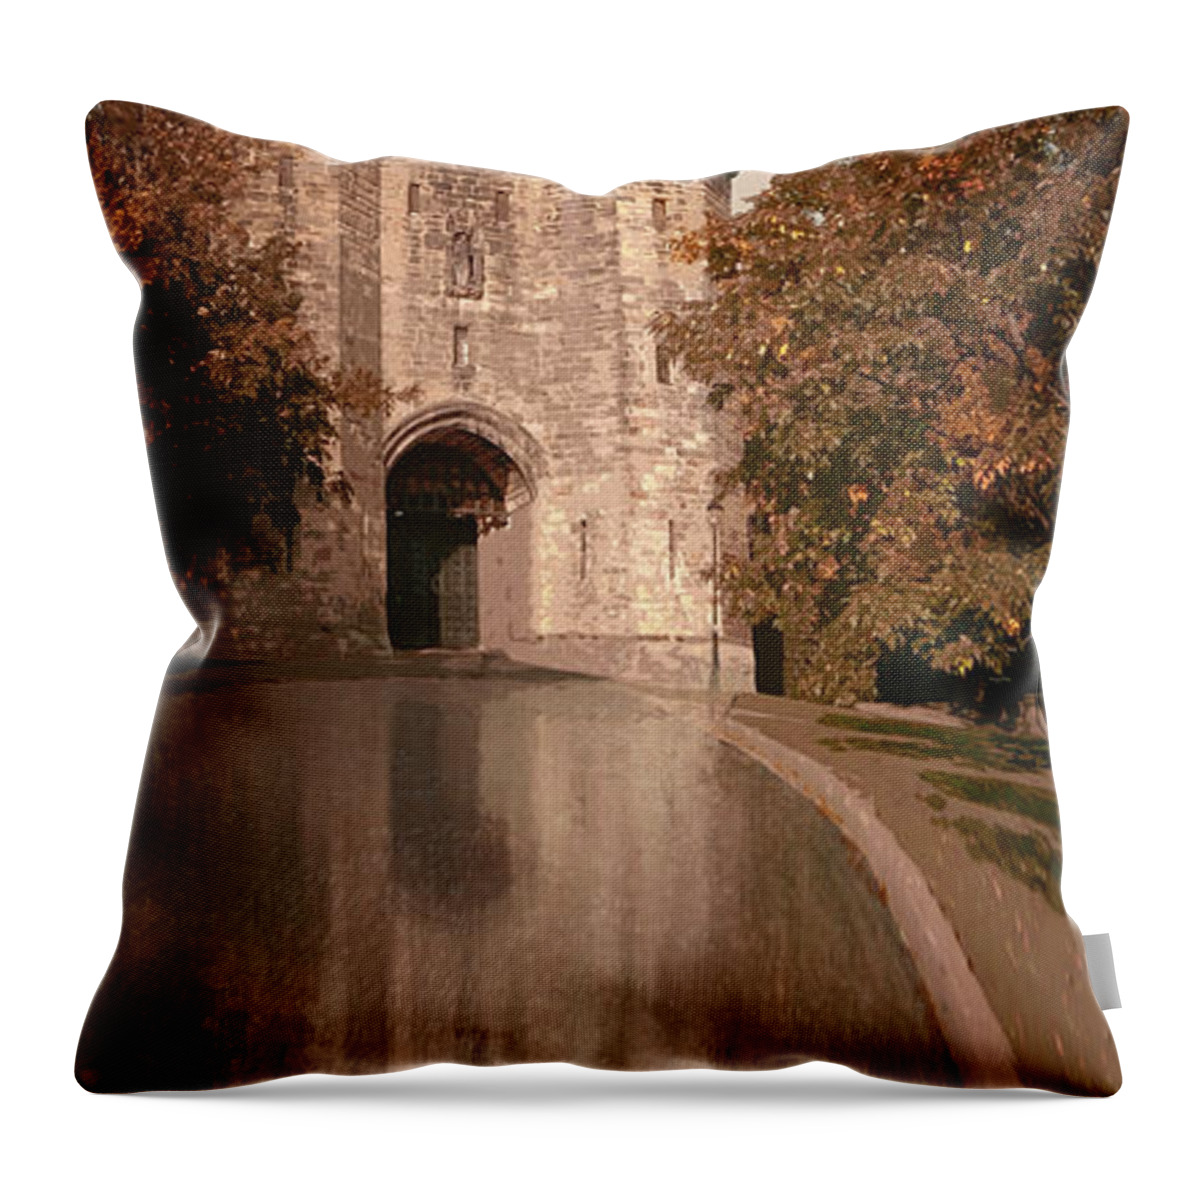 Lancaster Throw Pillow featuring the digital art Lancaster Castle by Joe Tamassy